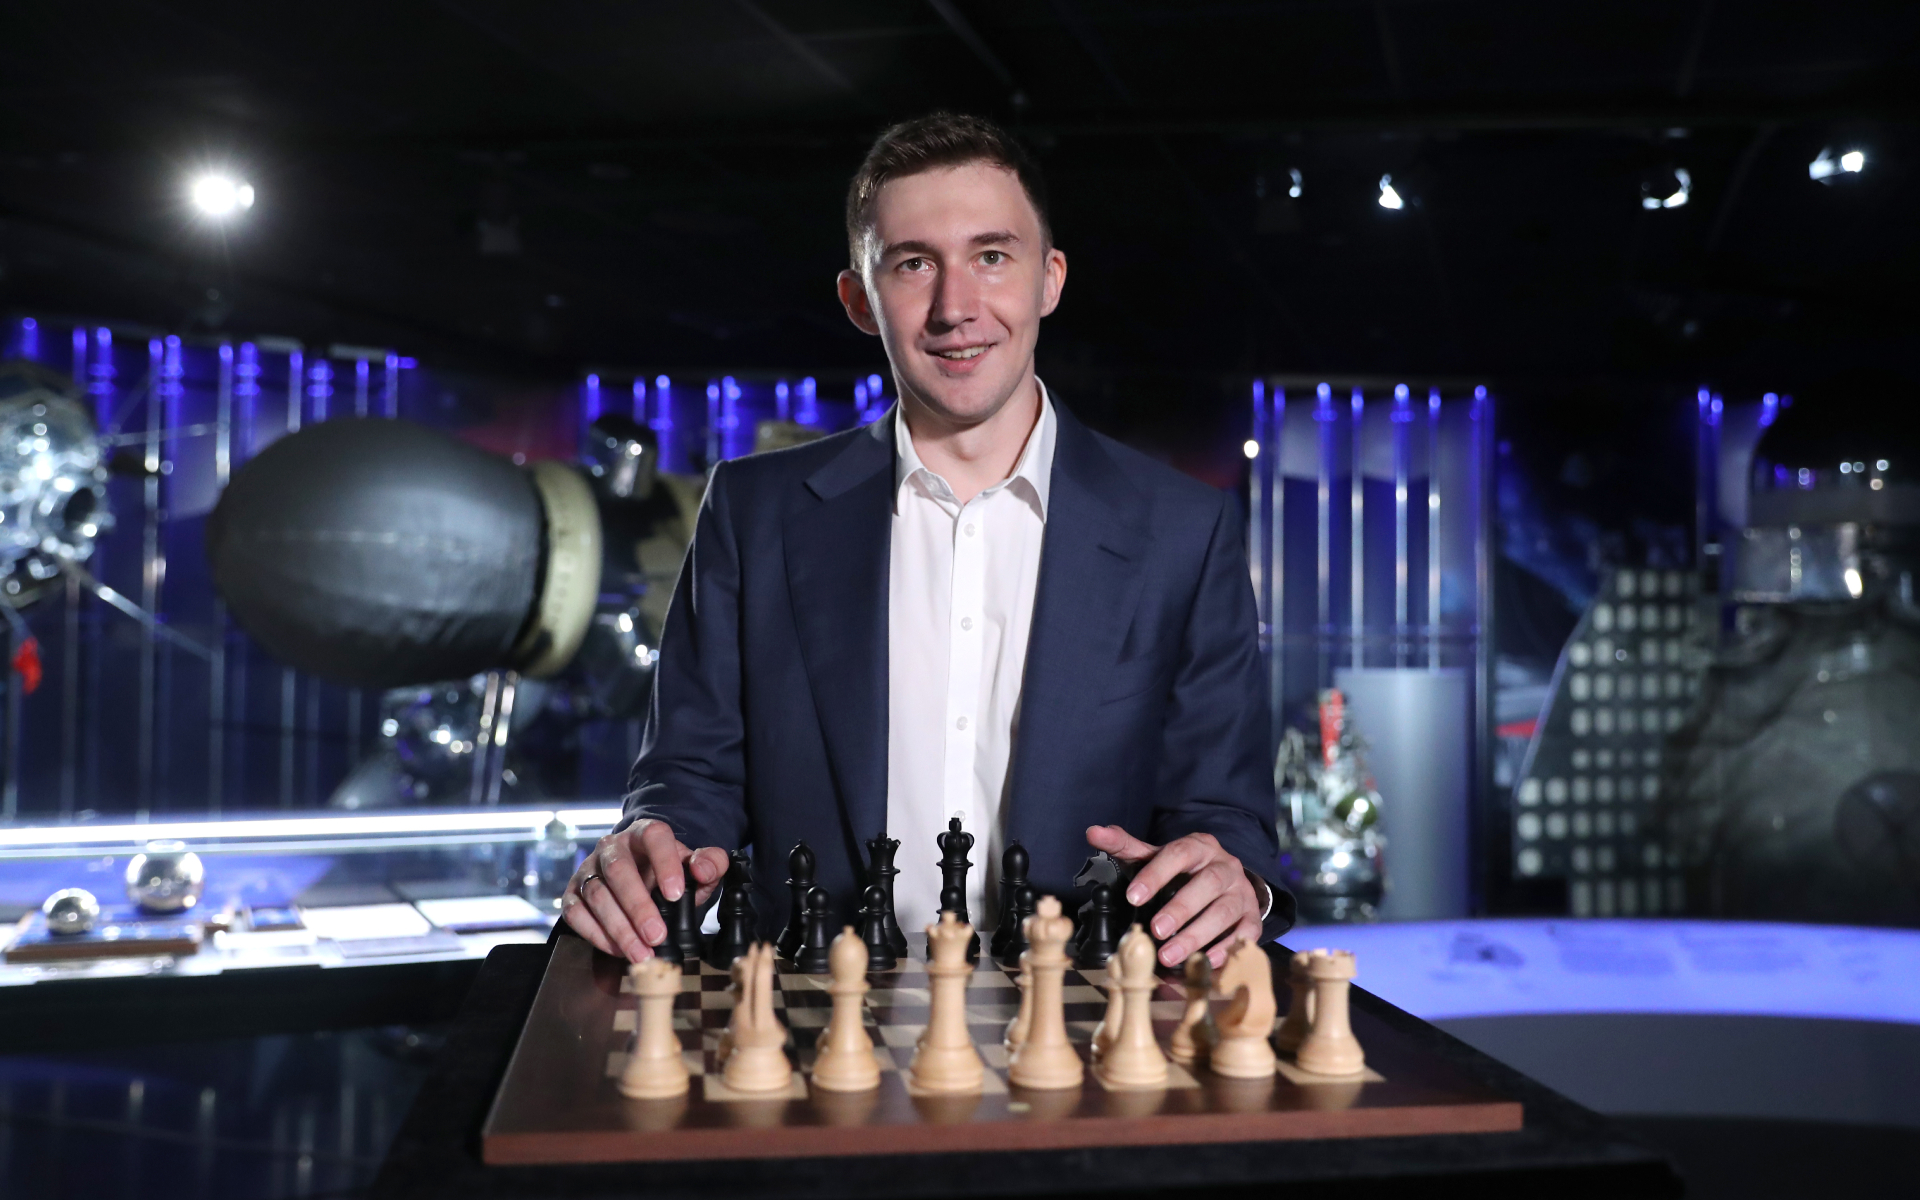 Шахматист Карякин заявил, что Дворкович пожертвовал им ради своих амбиций